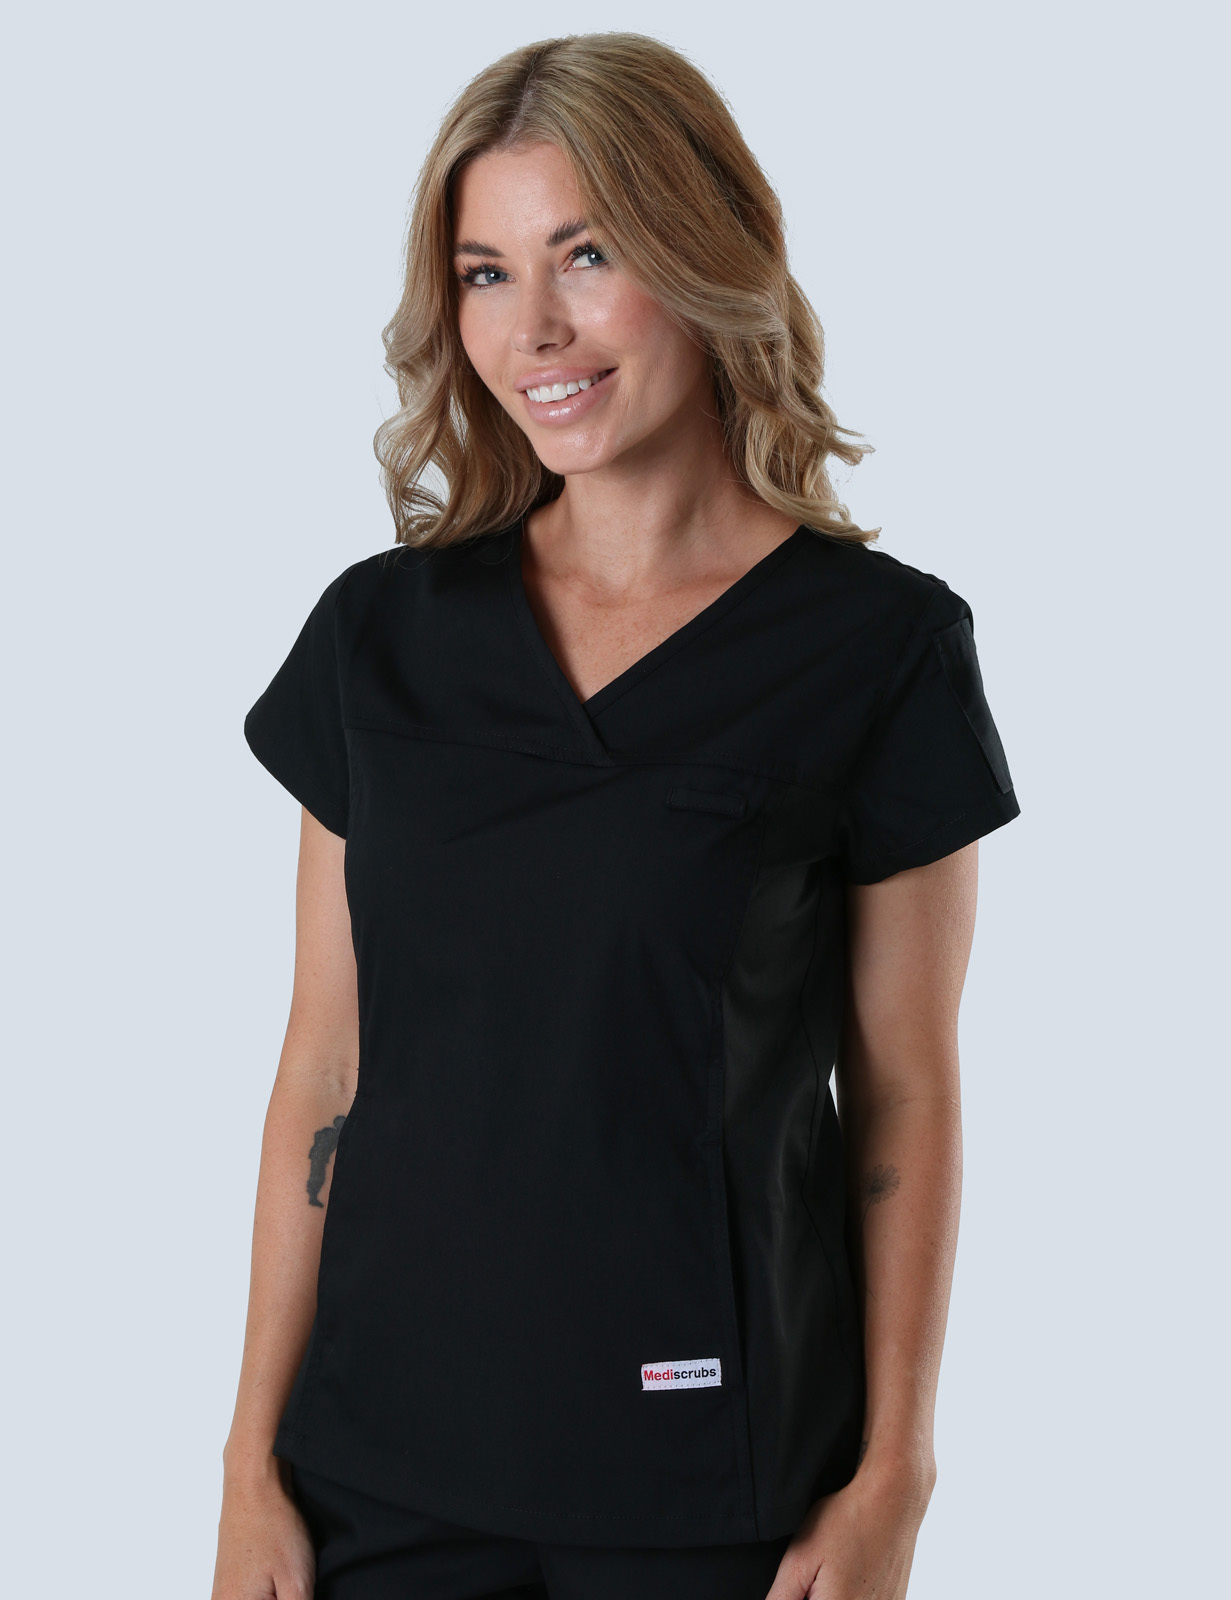 Logan Hospital - MI Nurse (Women's Fit Spandex Scrub Top in Black incl Logos)